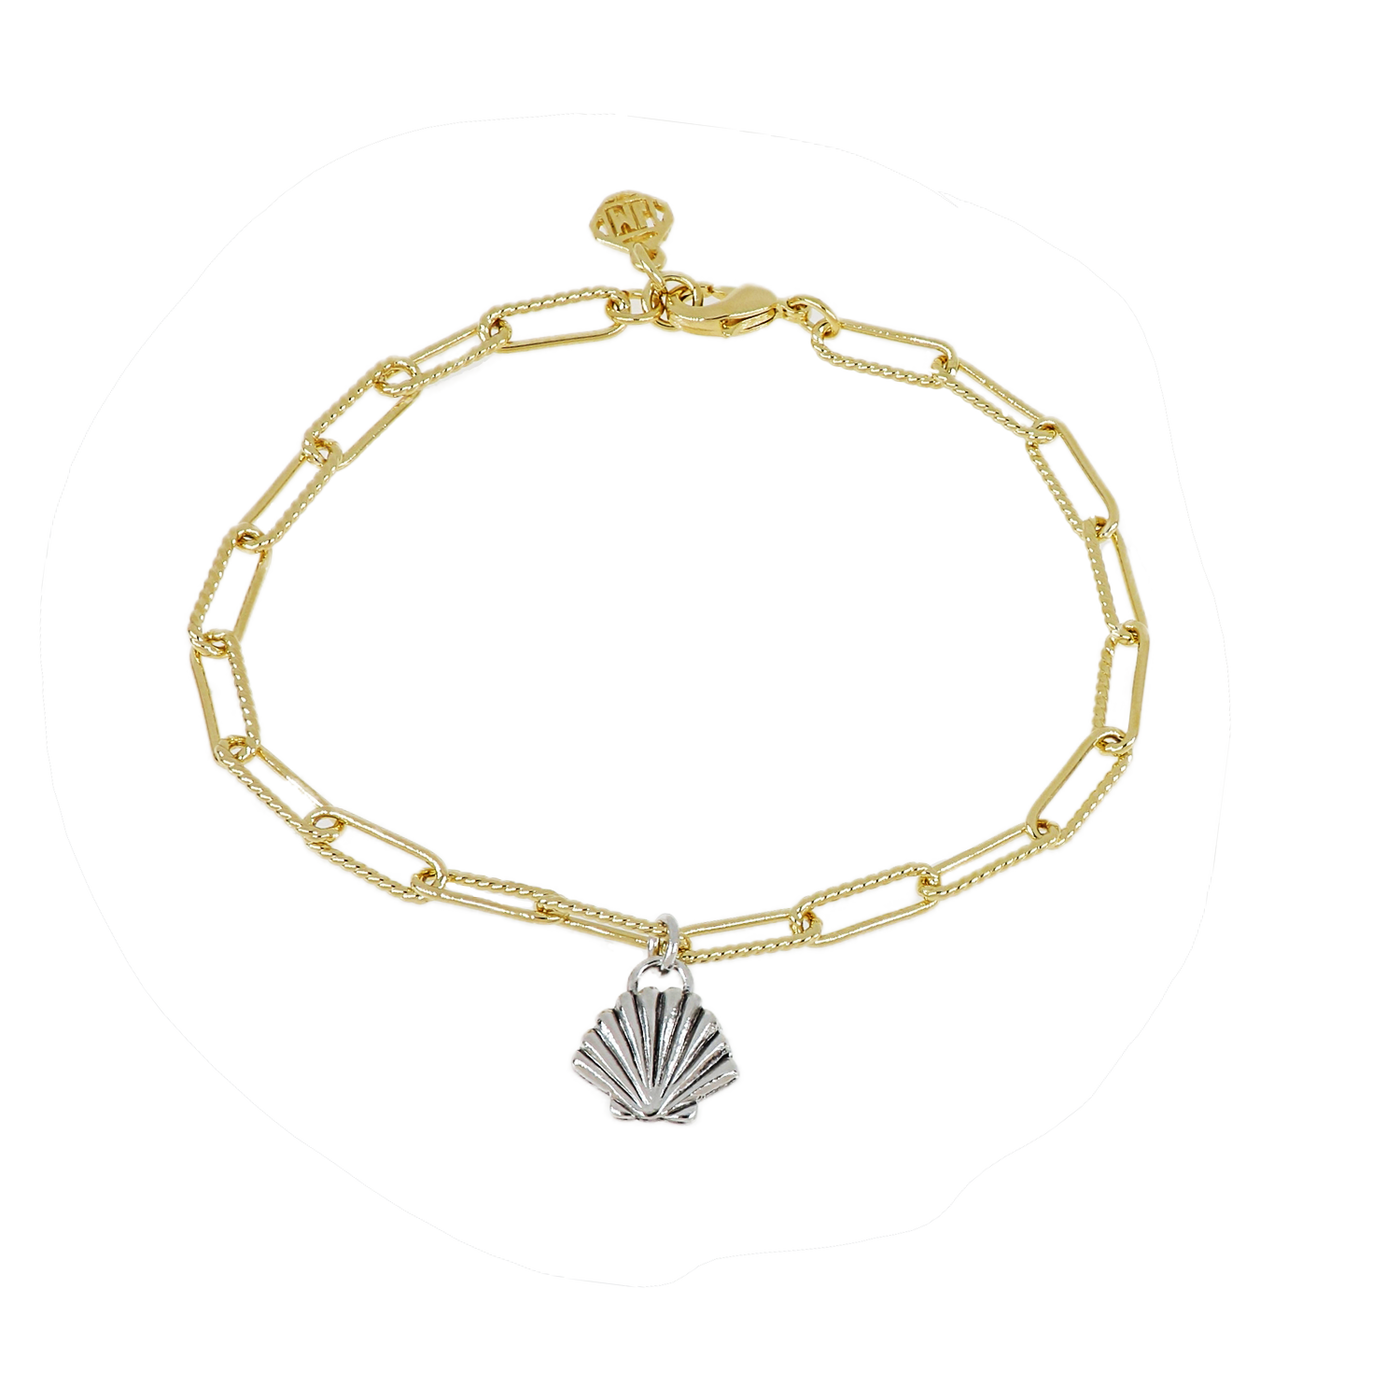 Diamante - Charm Bracelet Shell